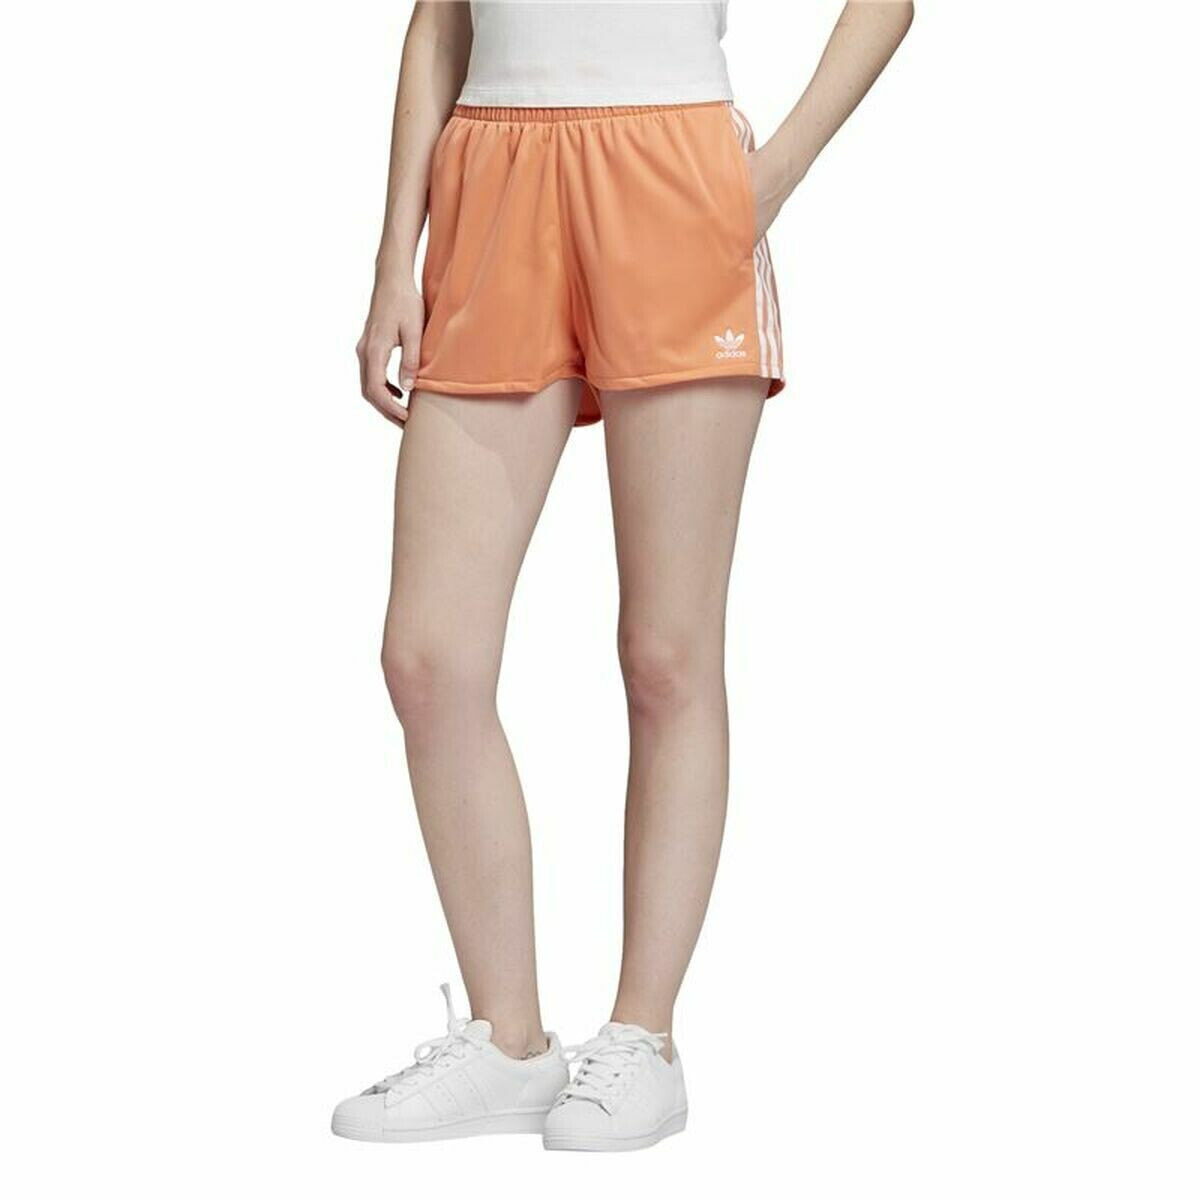 Sports Shorts for Women Adidas 3 Stripes Orange